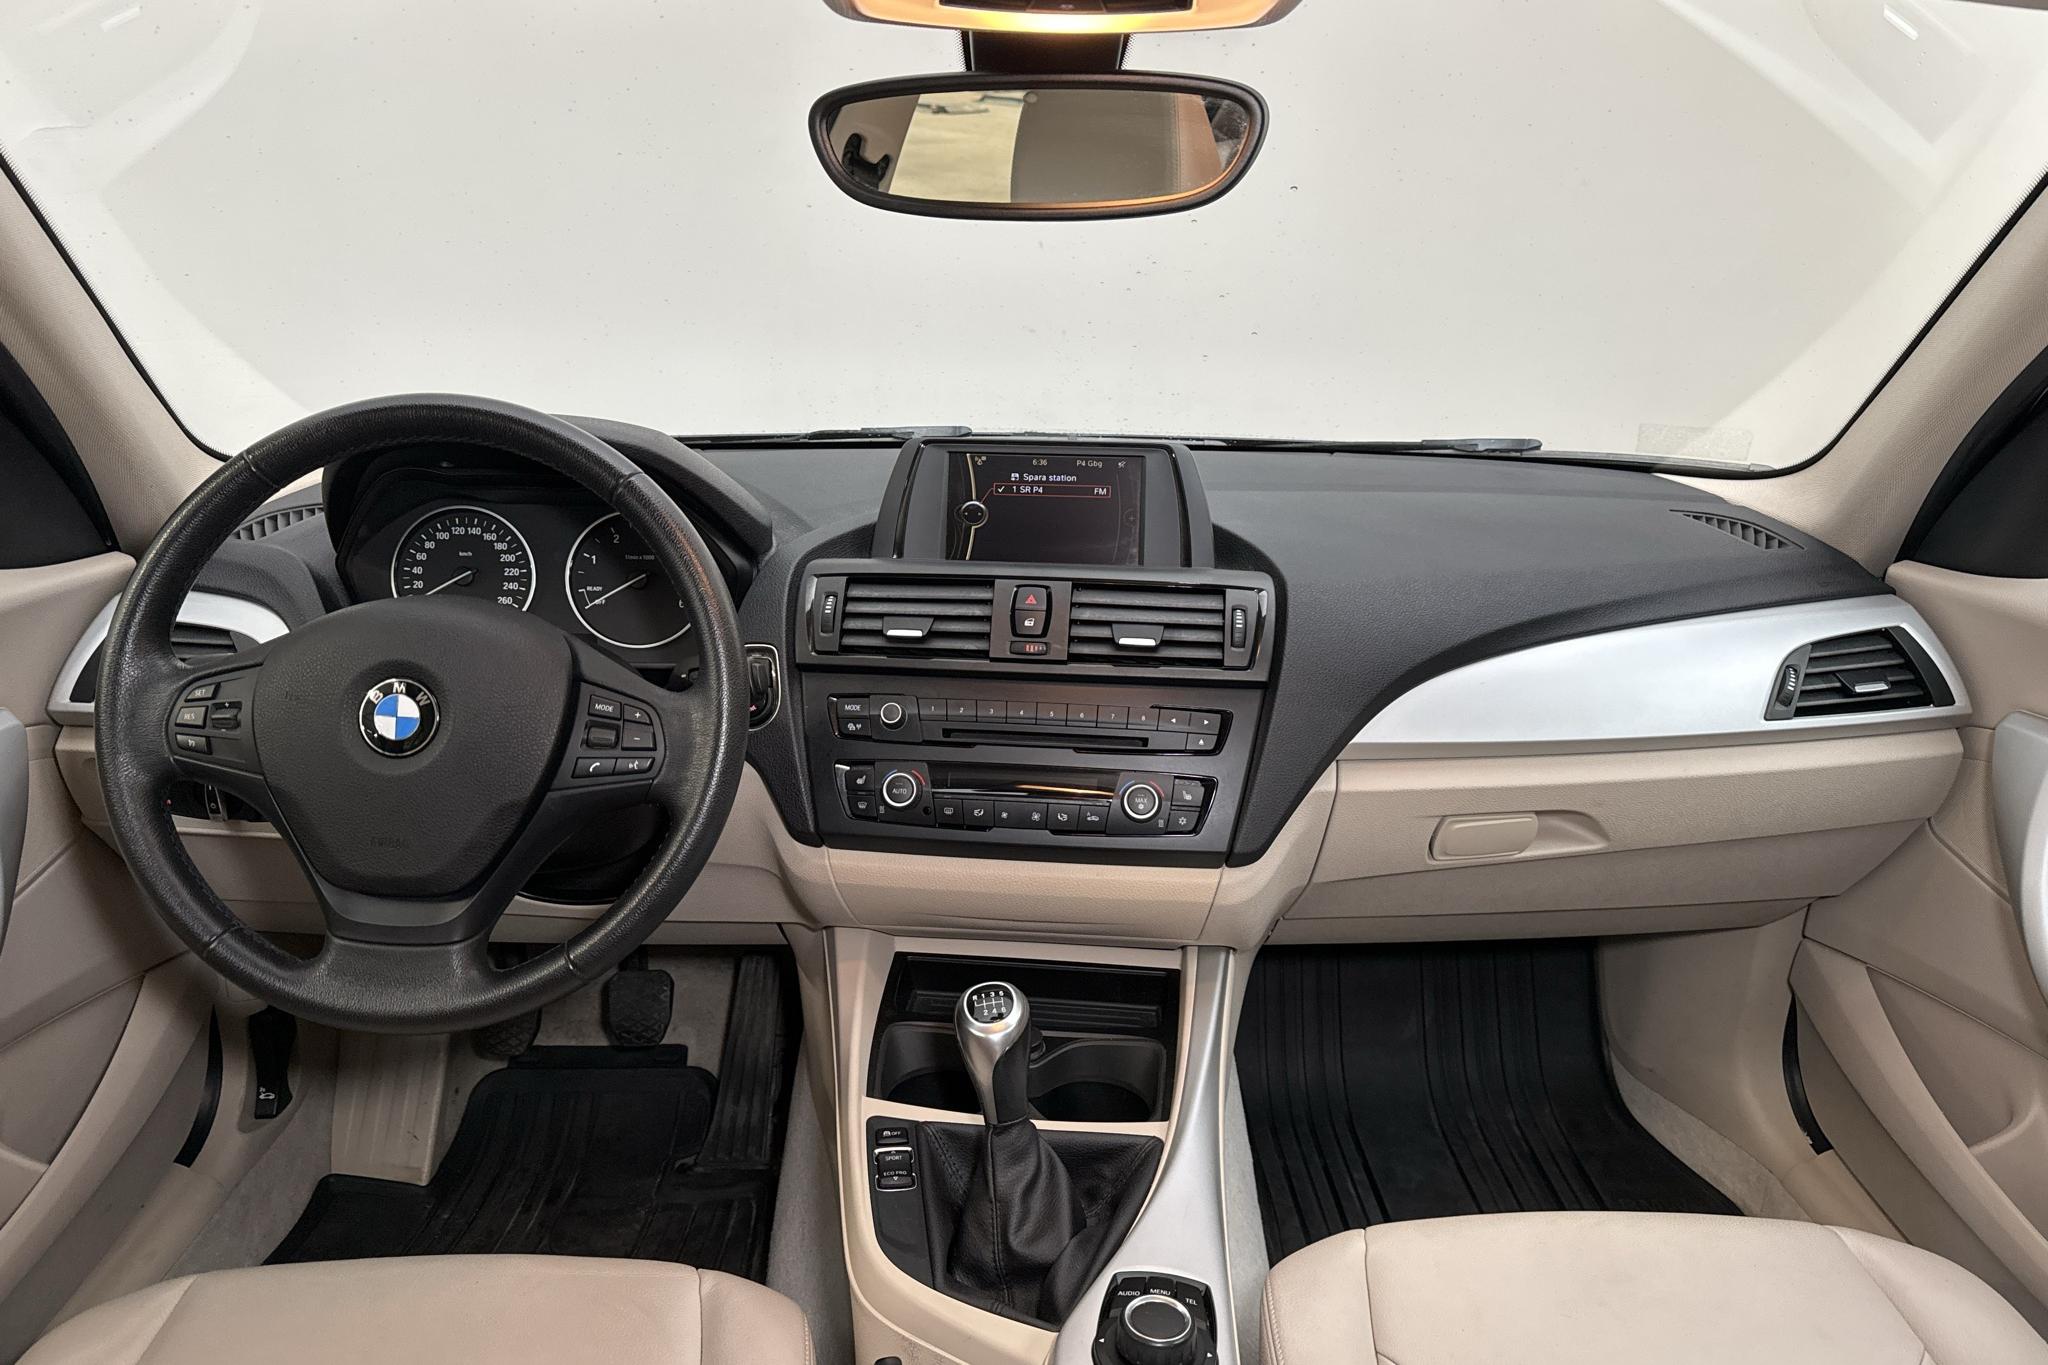 BMW 118d 5dr, F20 (143hk) - 9 066 mil - Manuell - svart - 2012